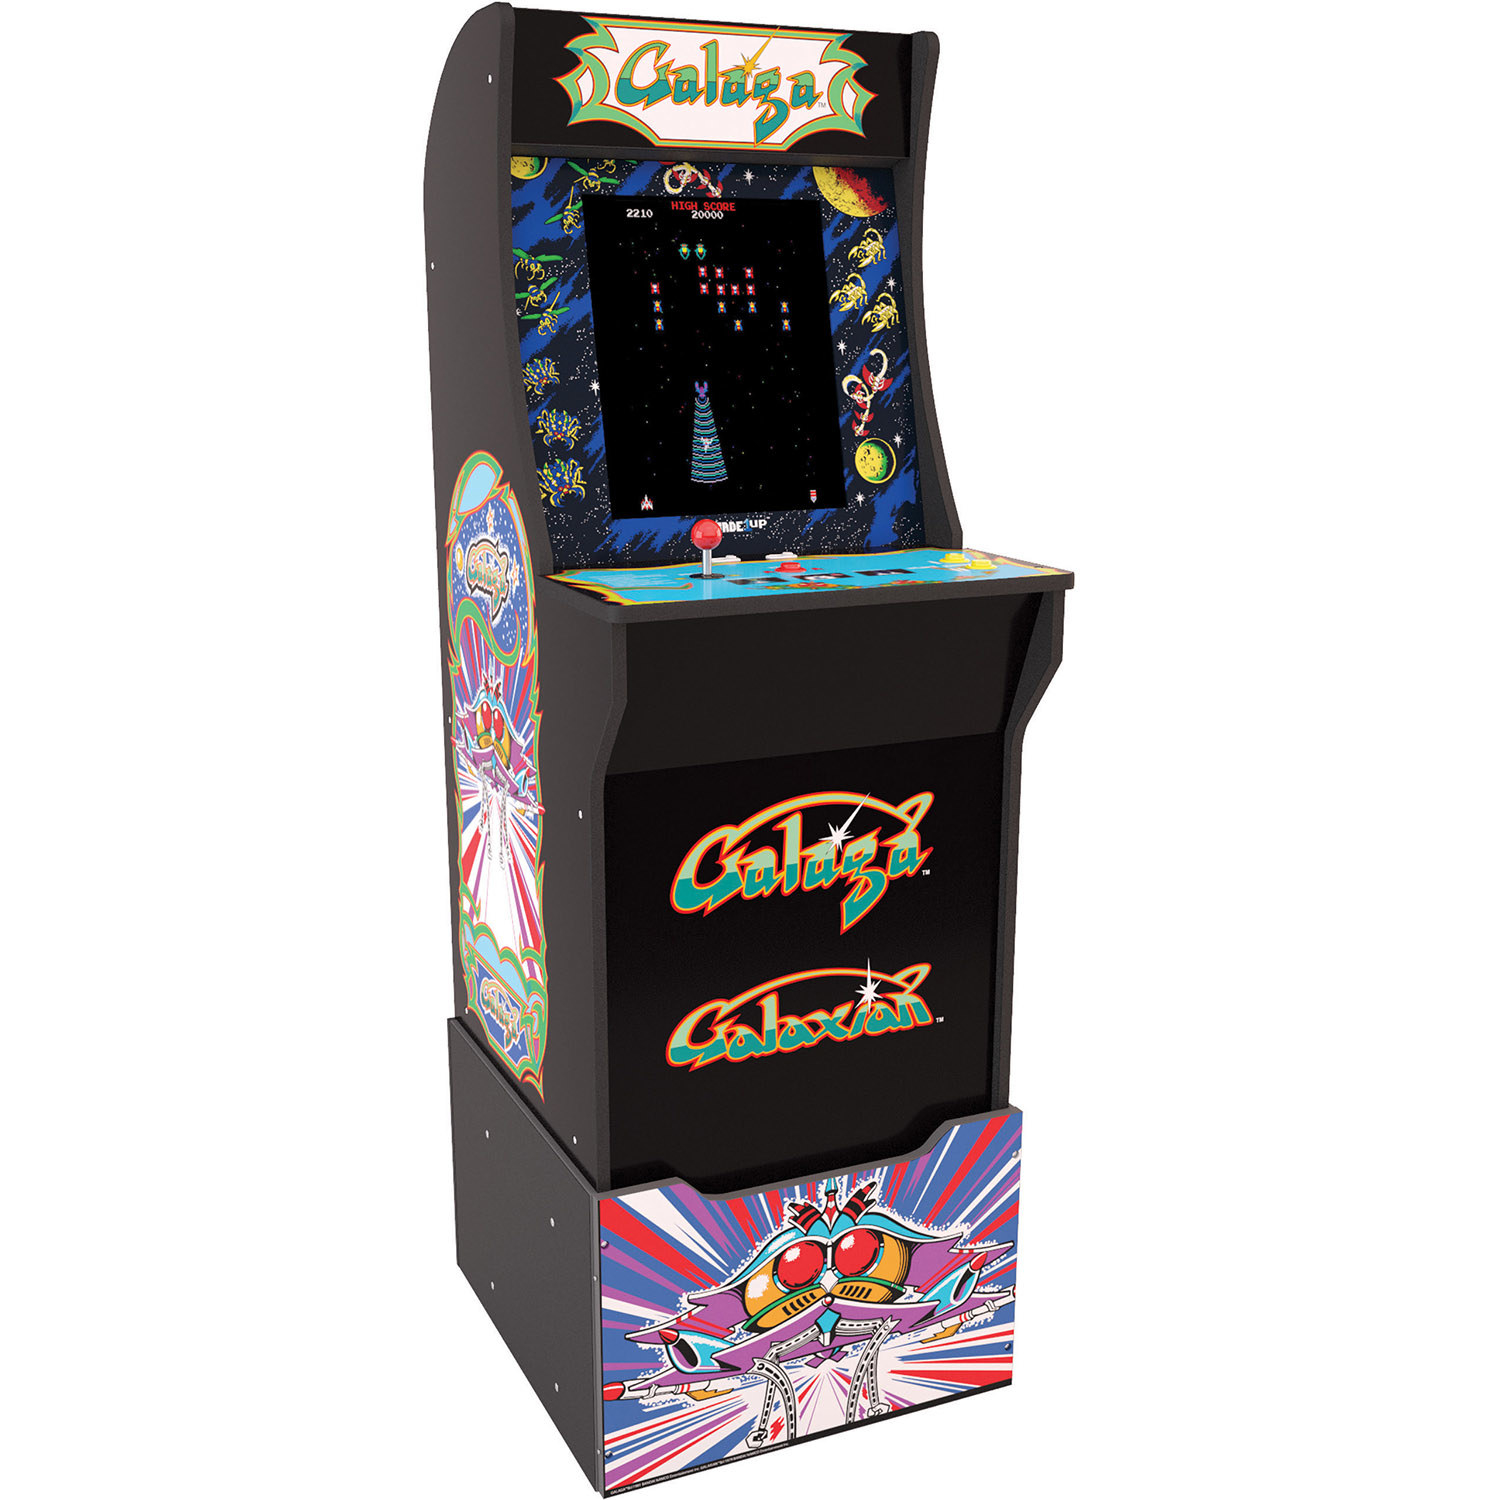 The arcade machine